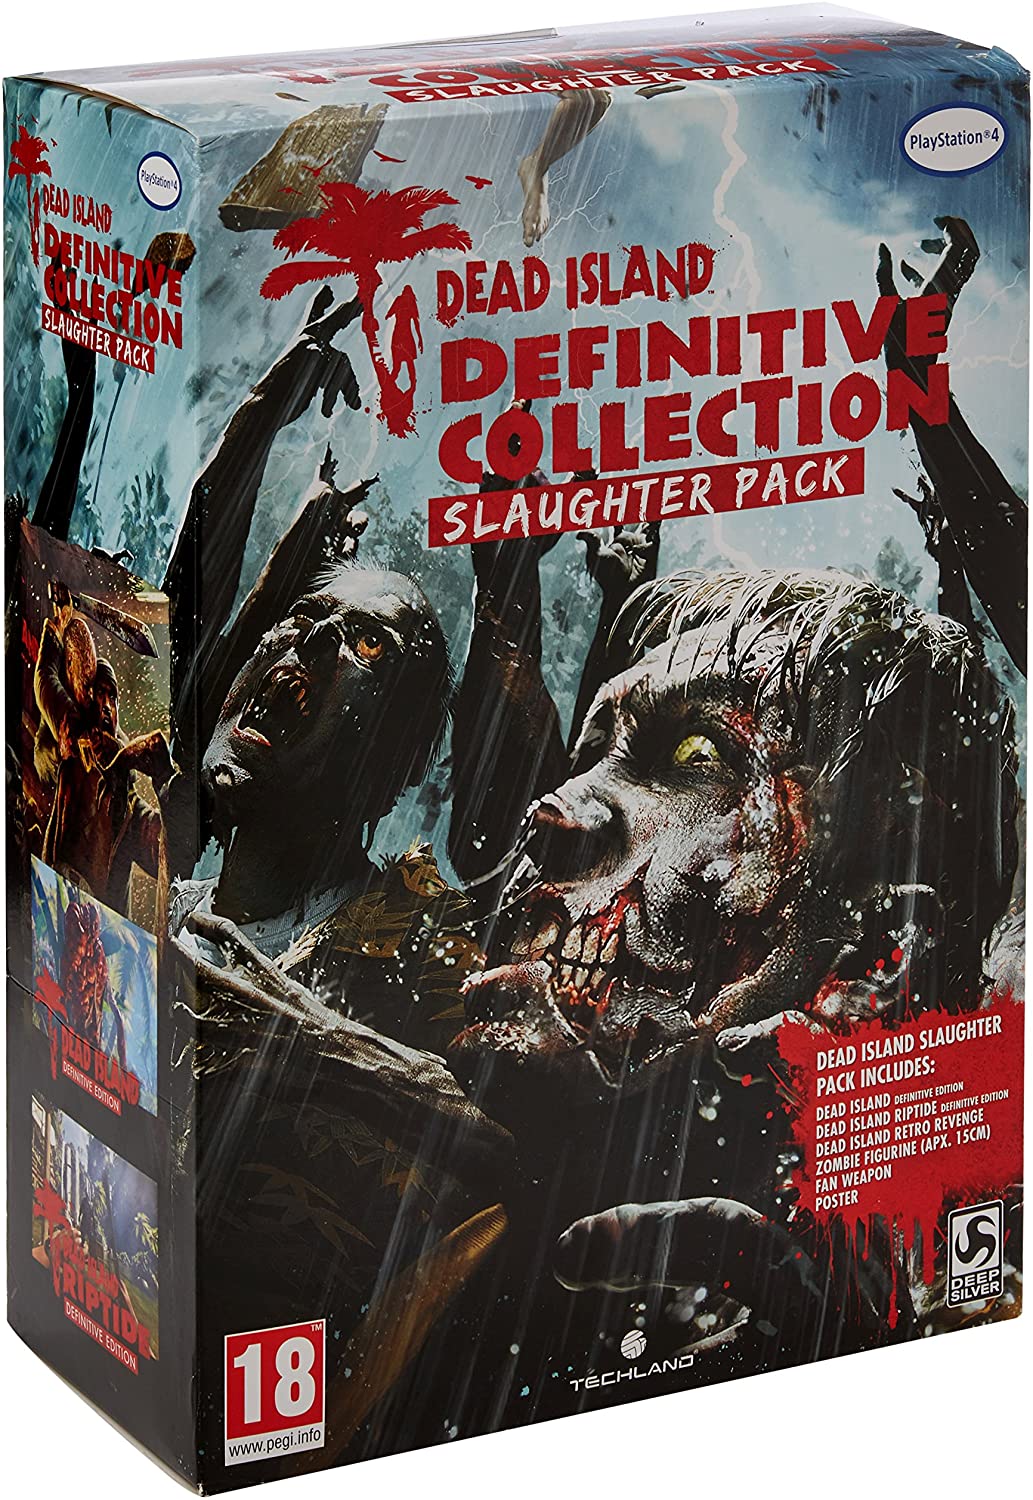 Dead Island Definitive Collection Slaughter Pack (újszerű)